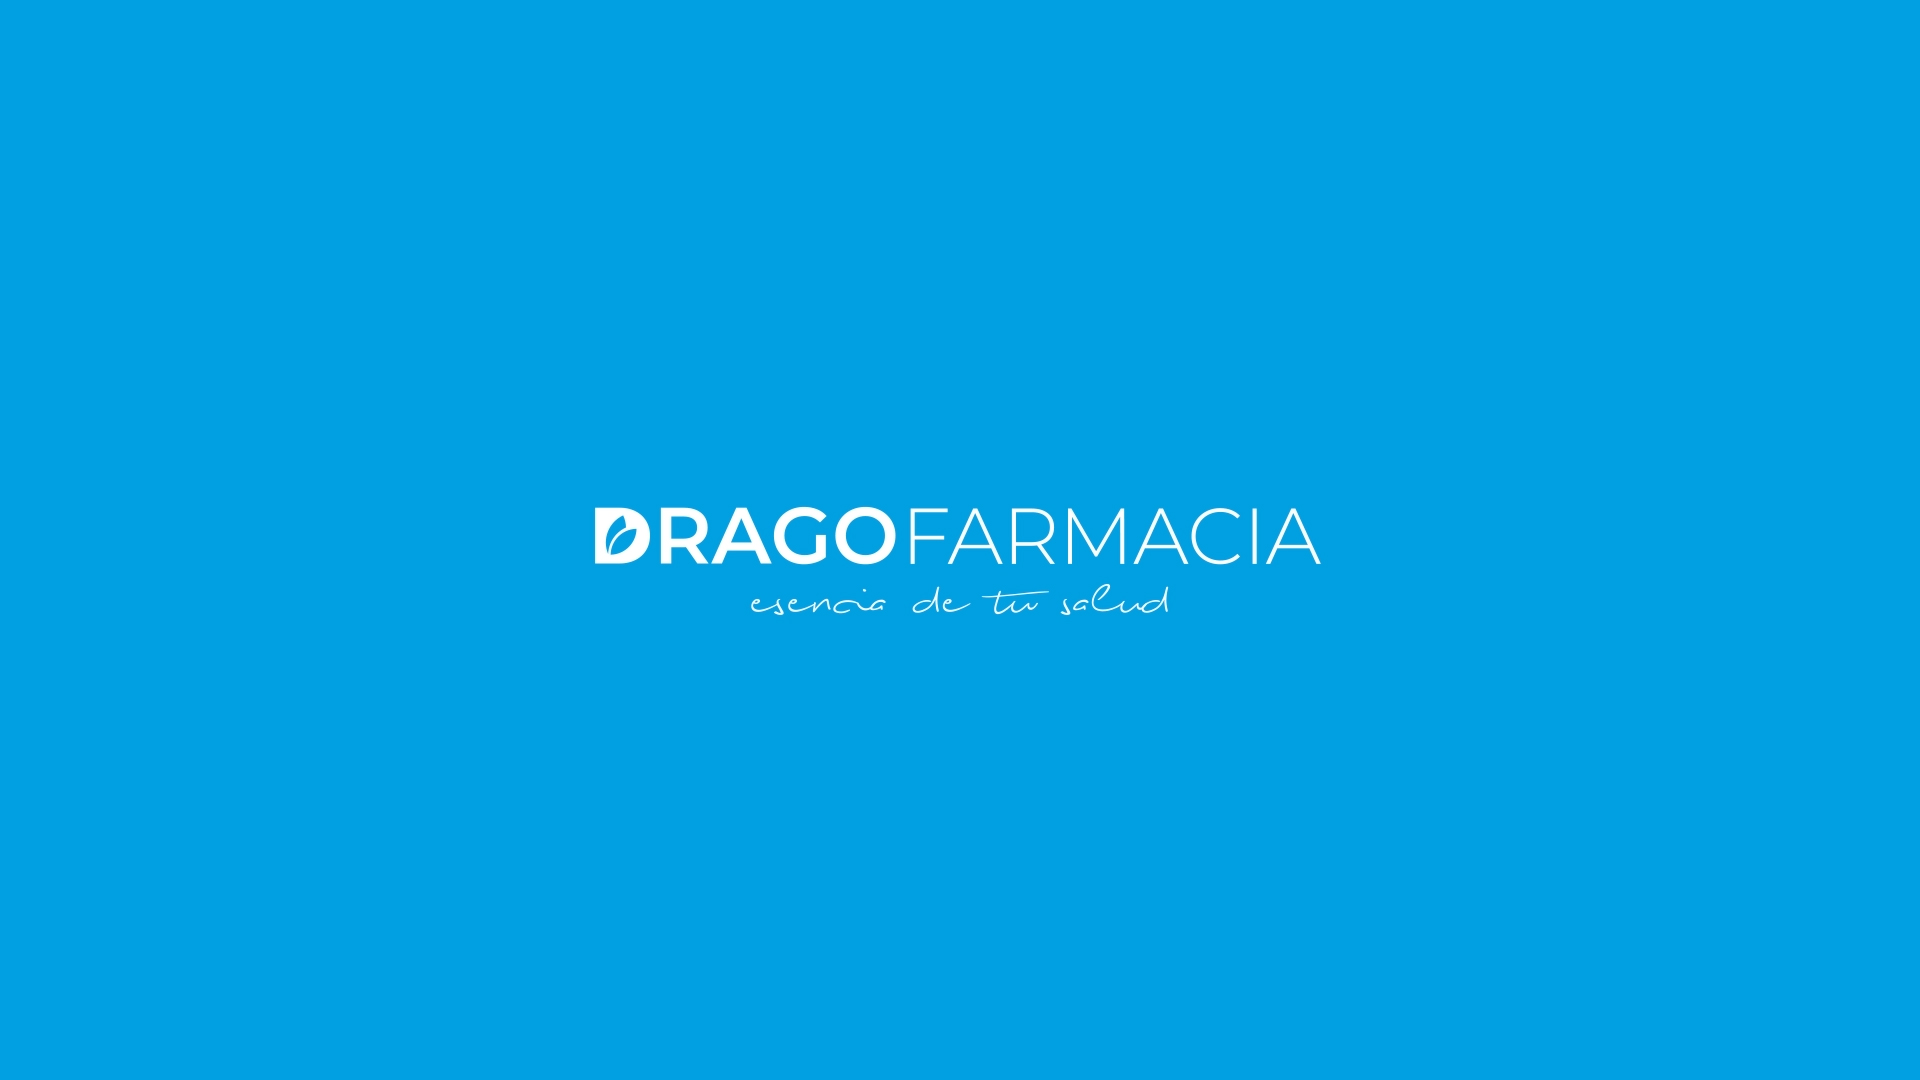 brandcelona_farmaciadrago